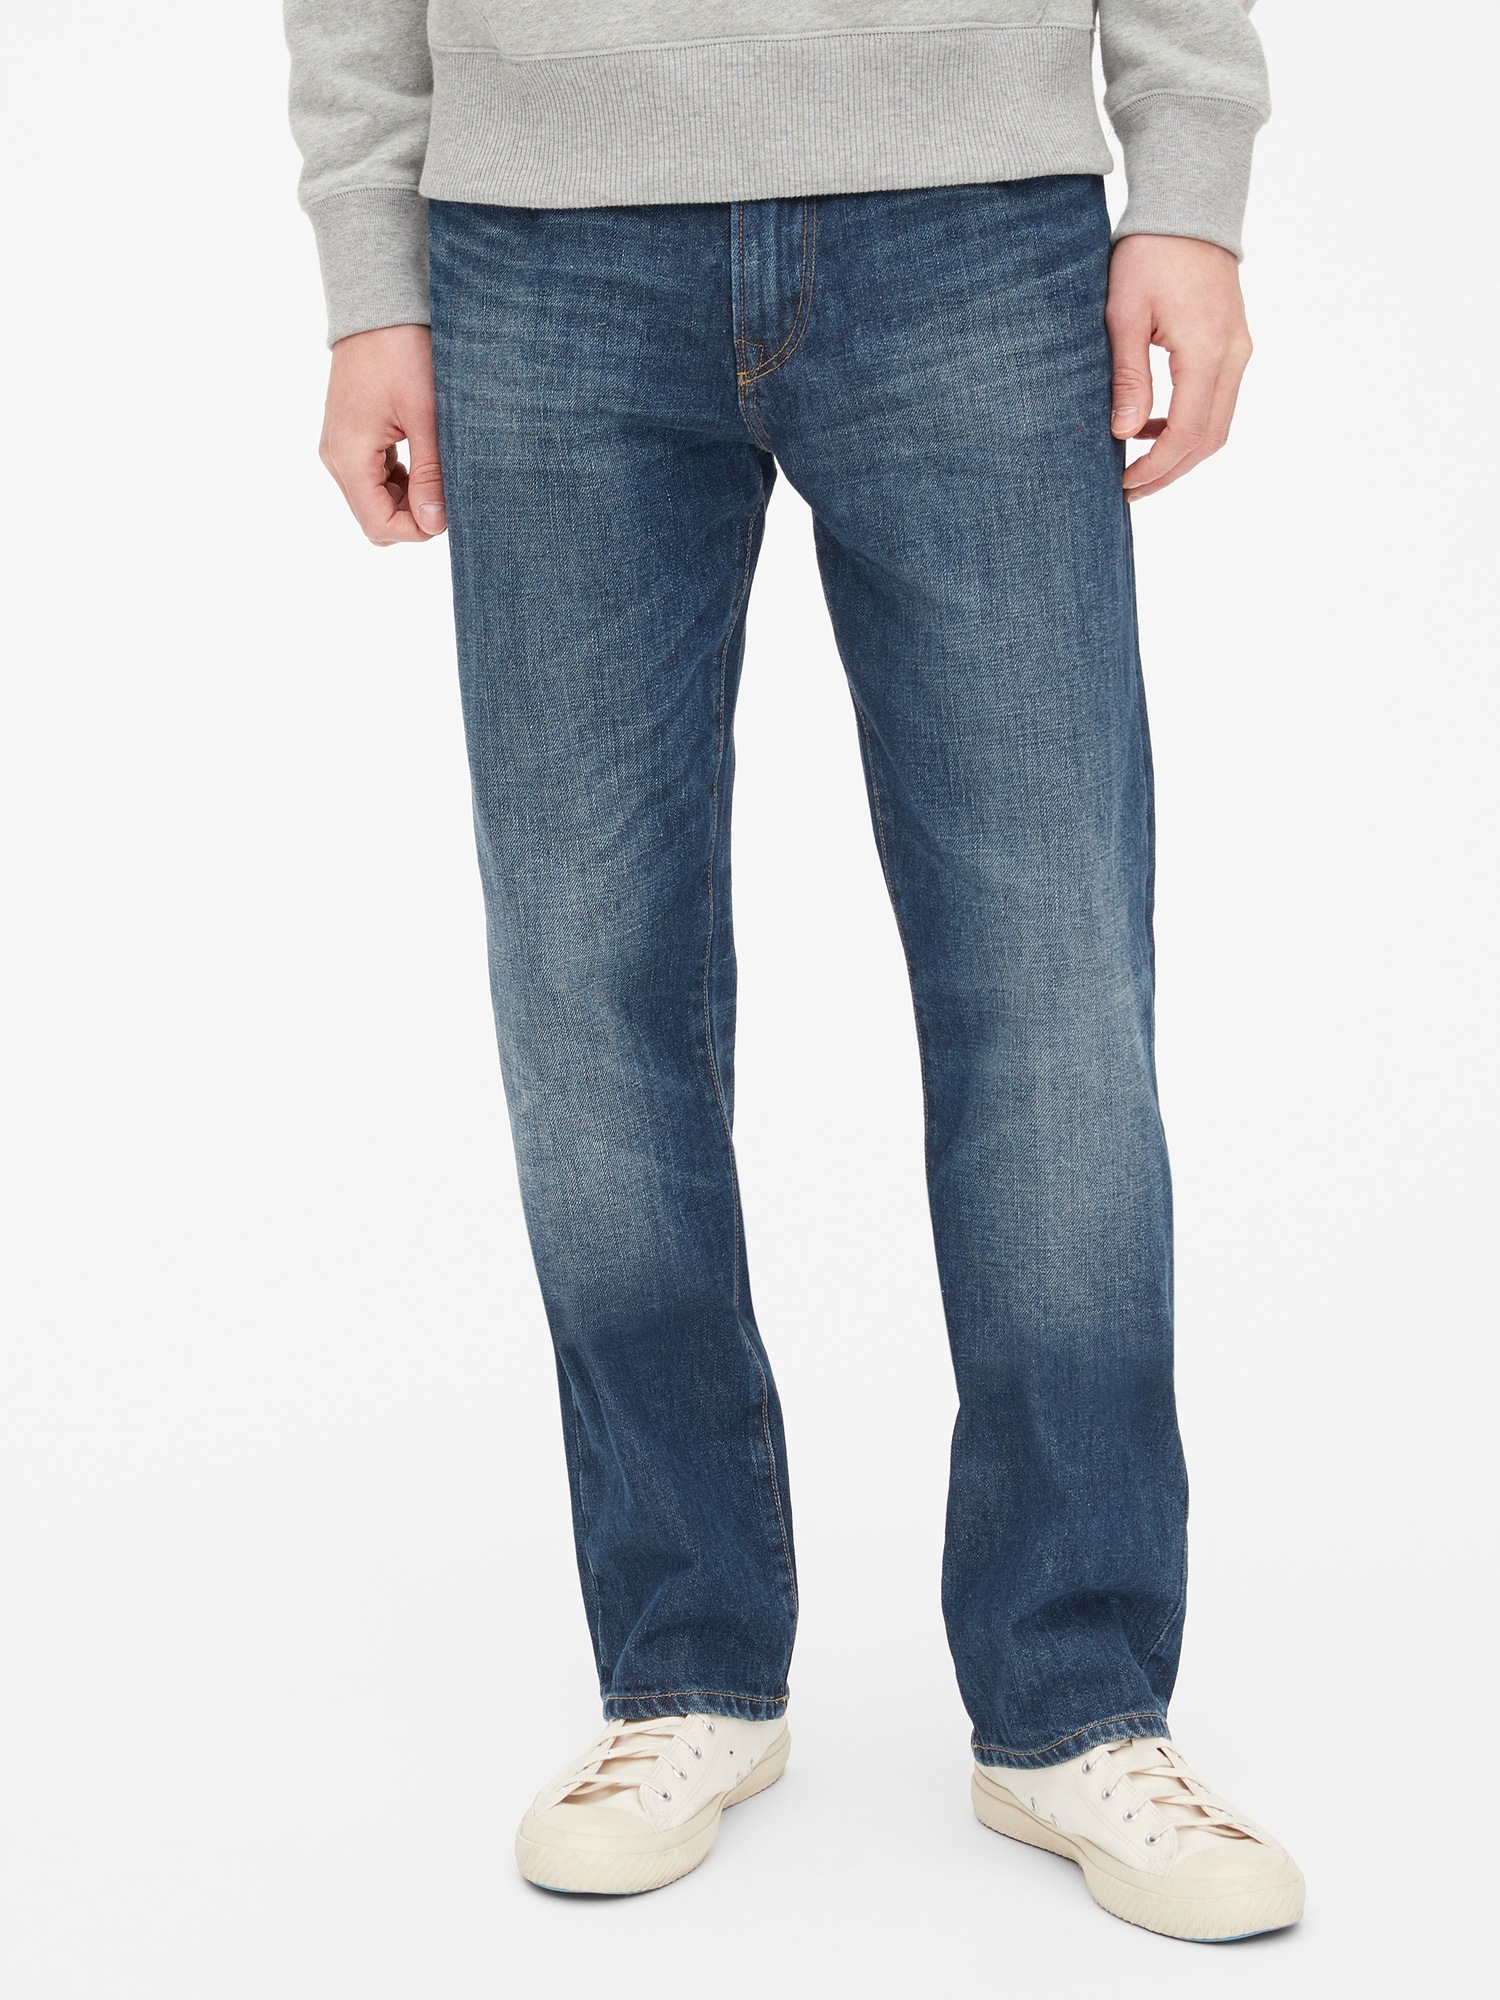 gap canada jeans